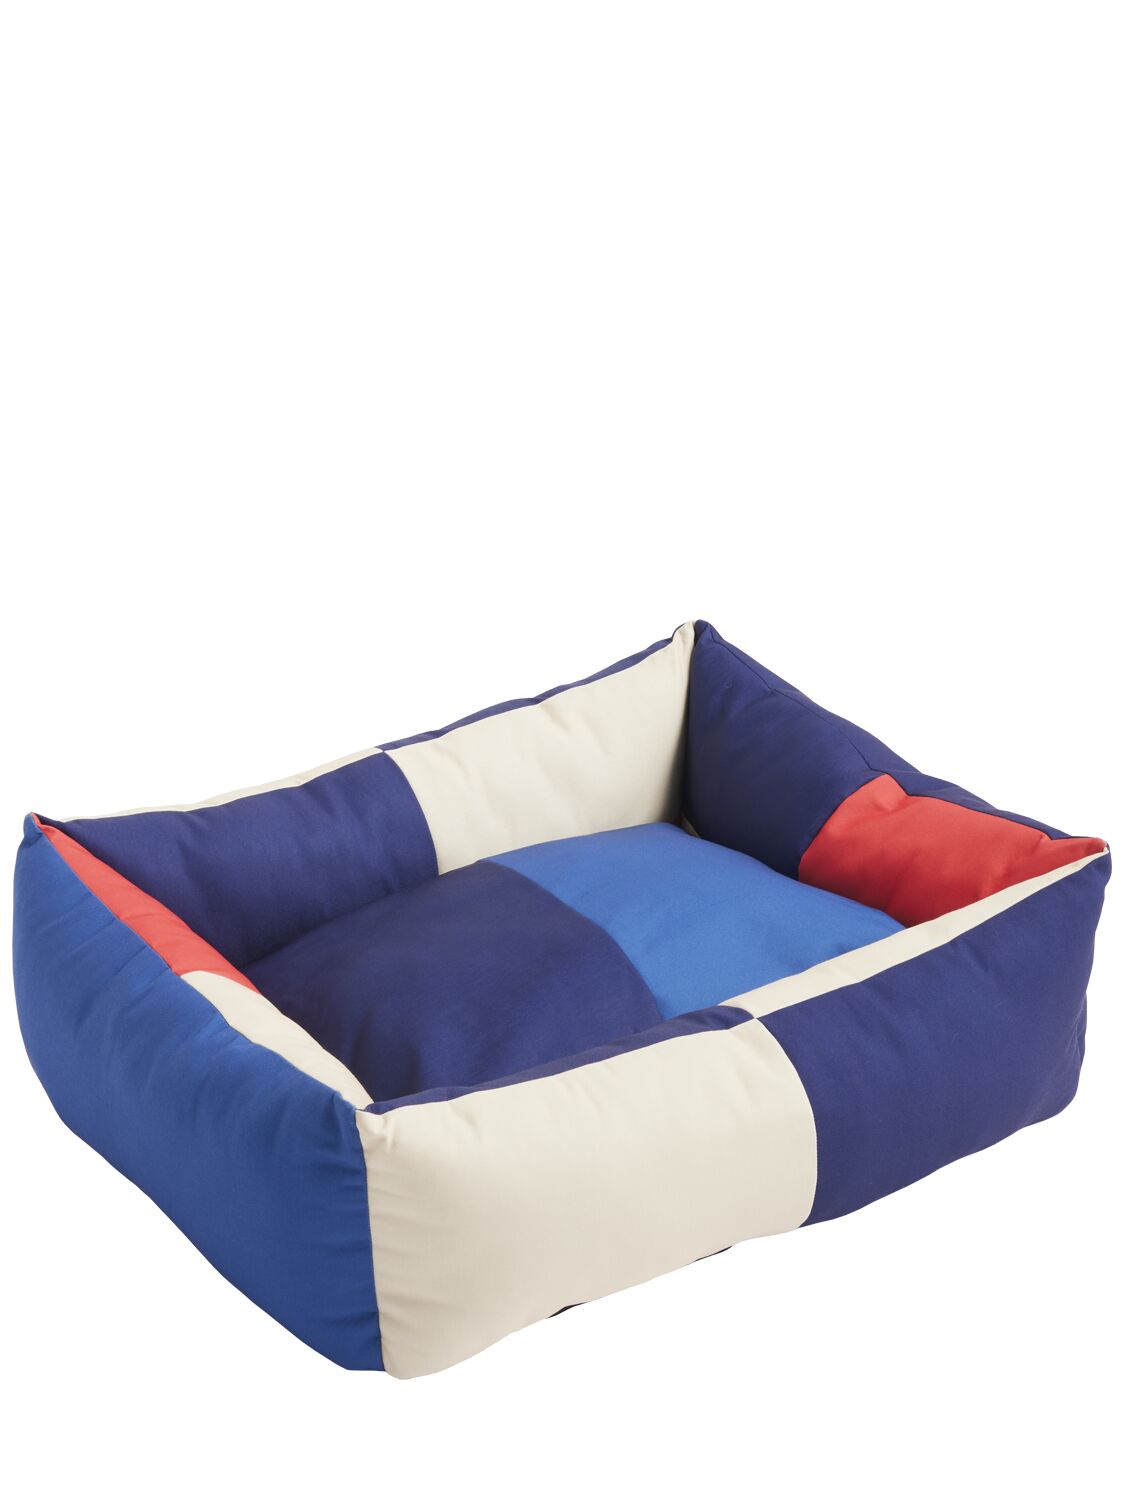 Image of Medium Dog Bed